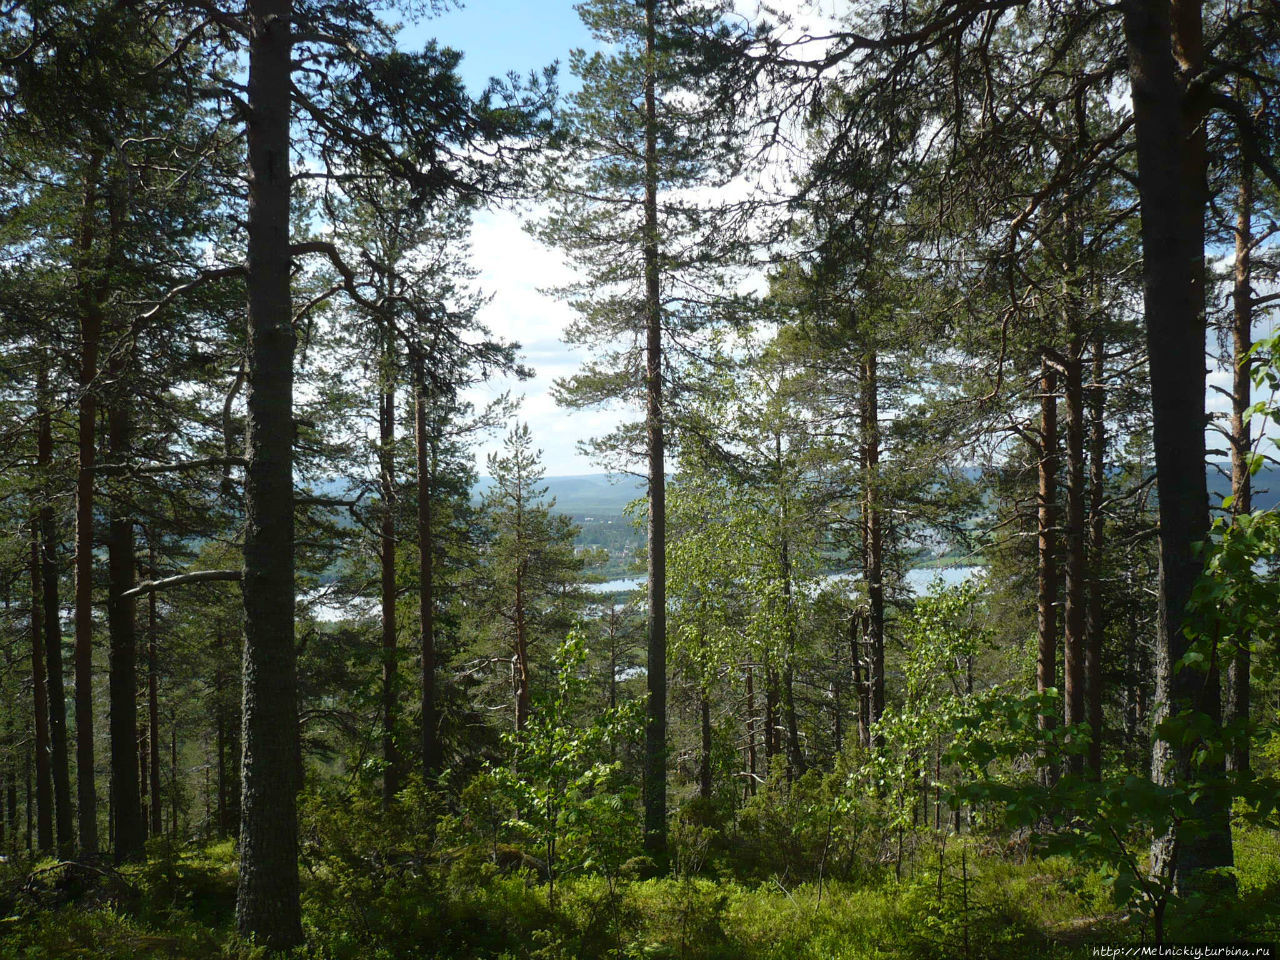 Прогулка по горе Авасакса Юлиторнио, Финляндия